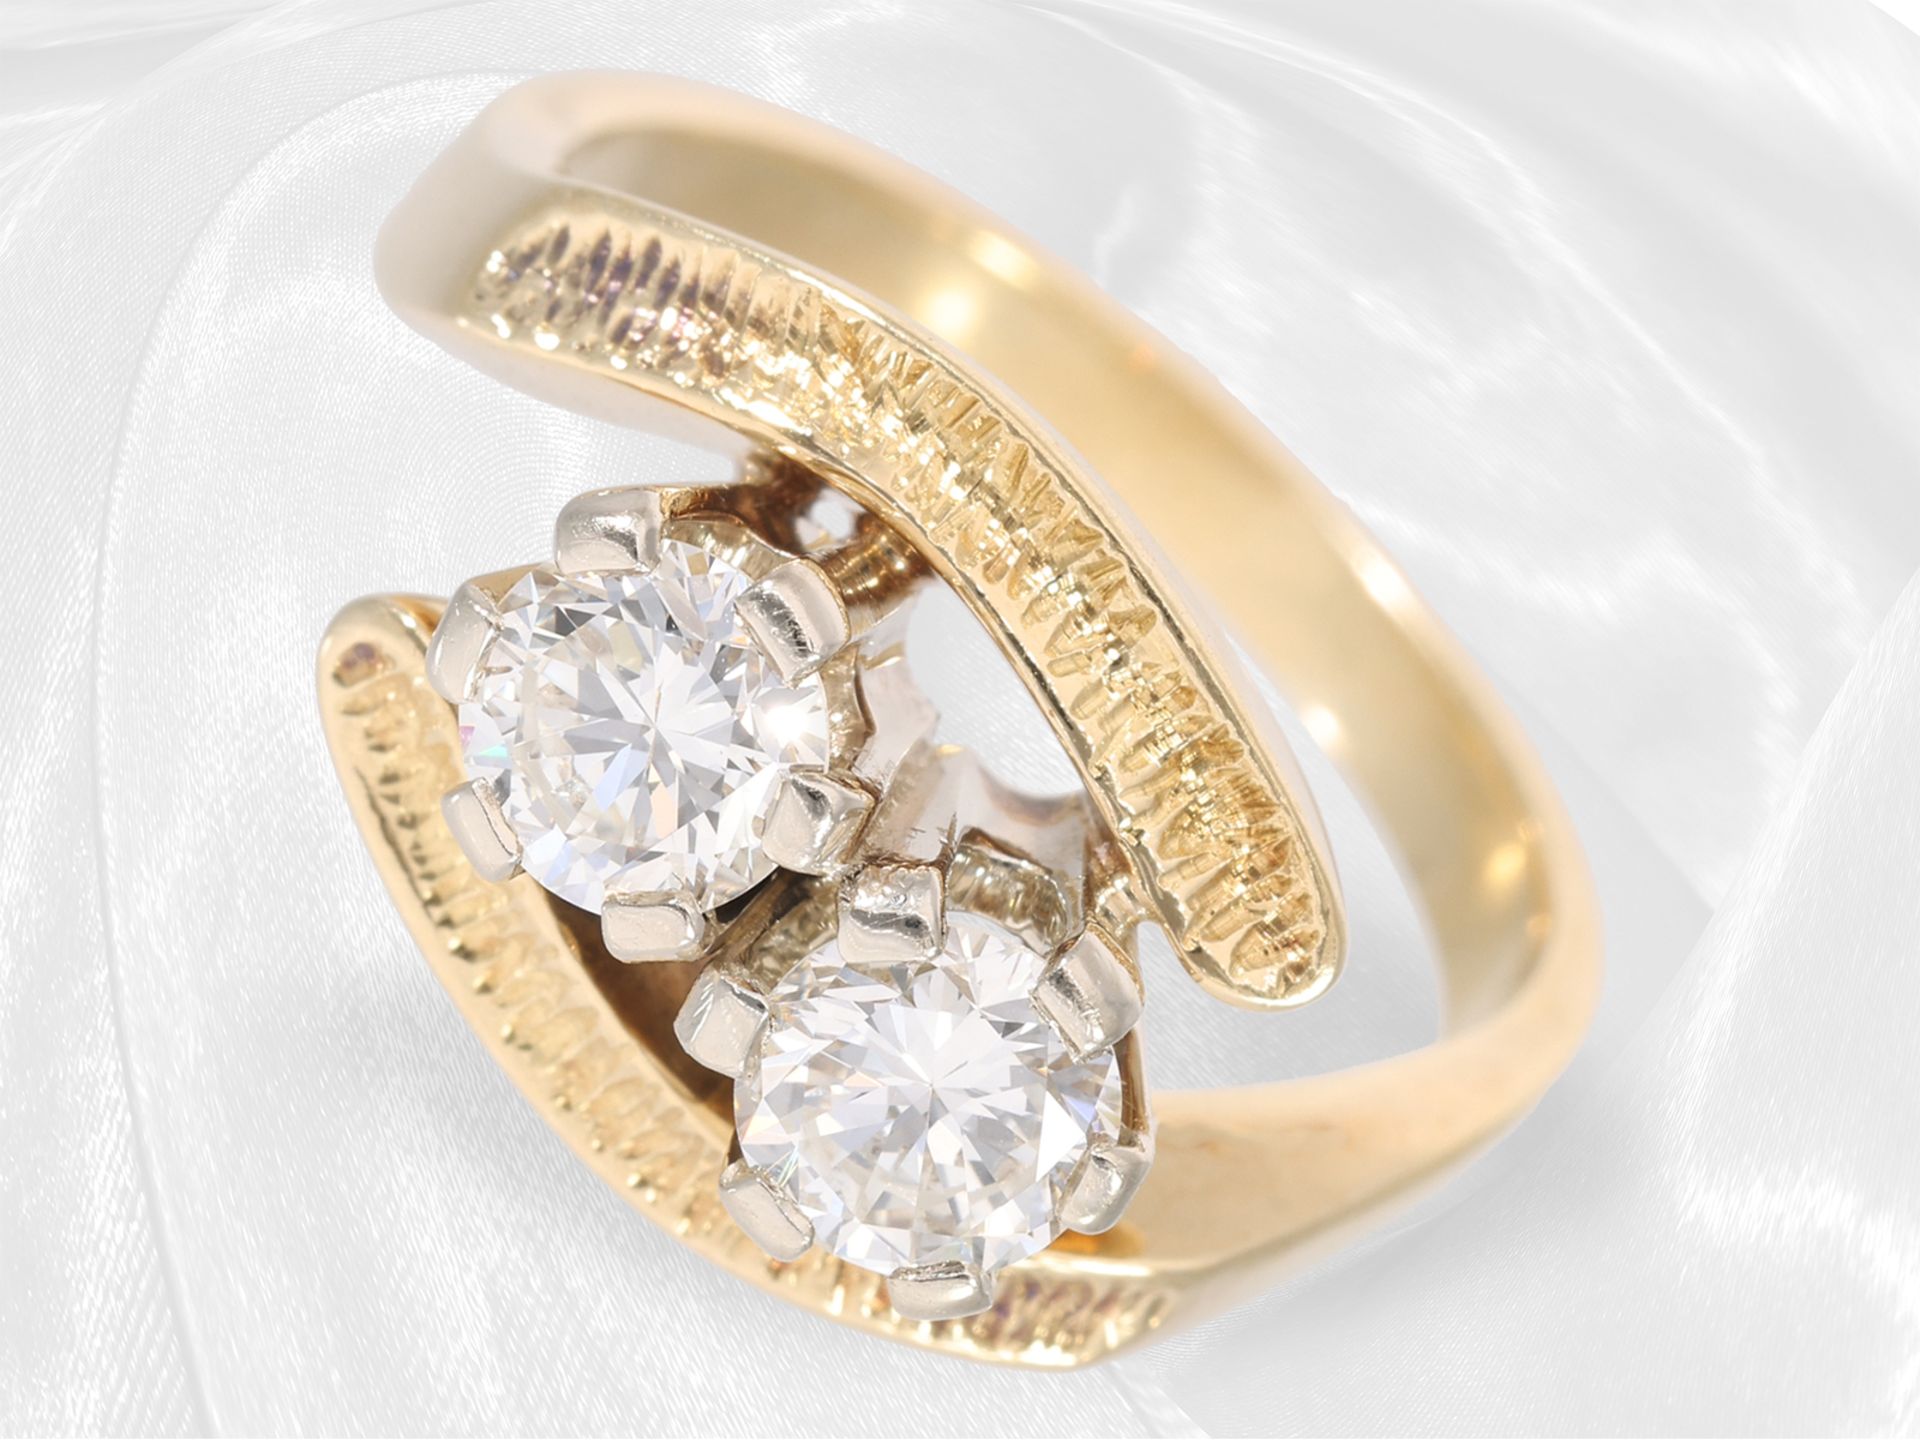 Vintage goldsmith's ring, approx. 0.9ct brilliant-cut diamonds